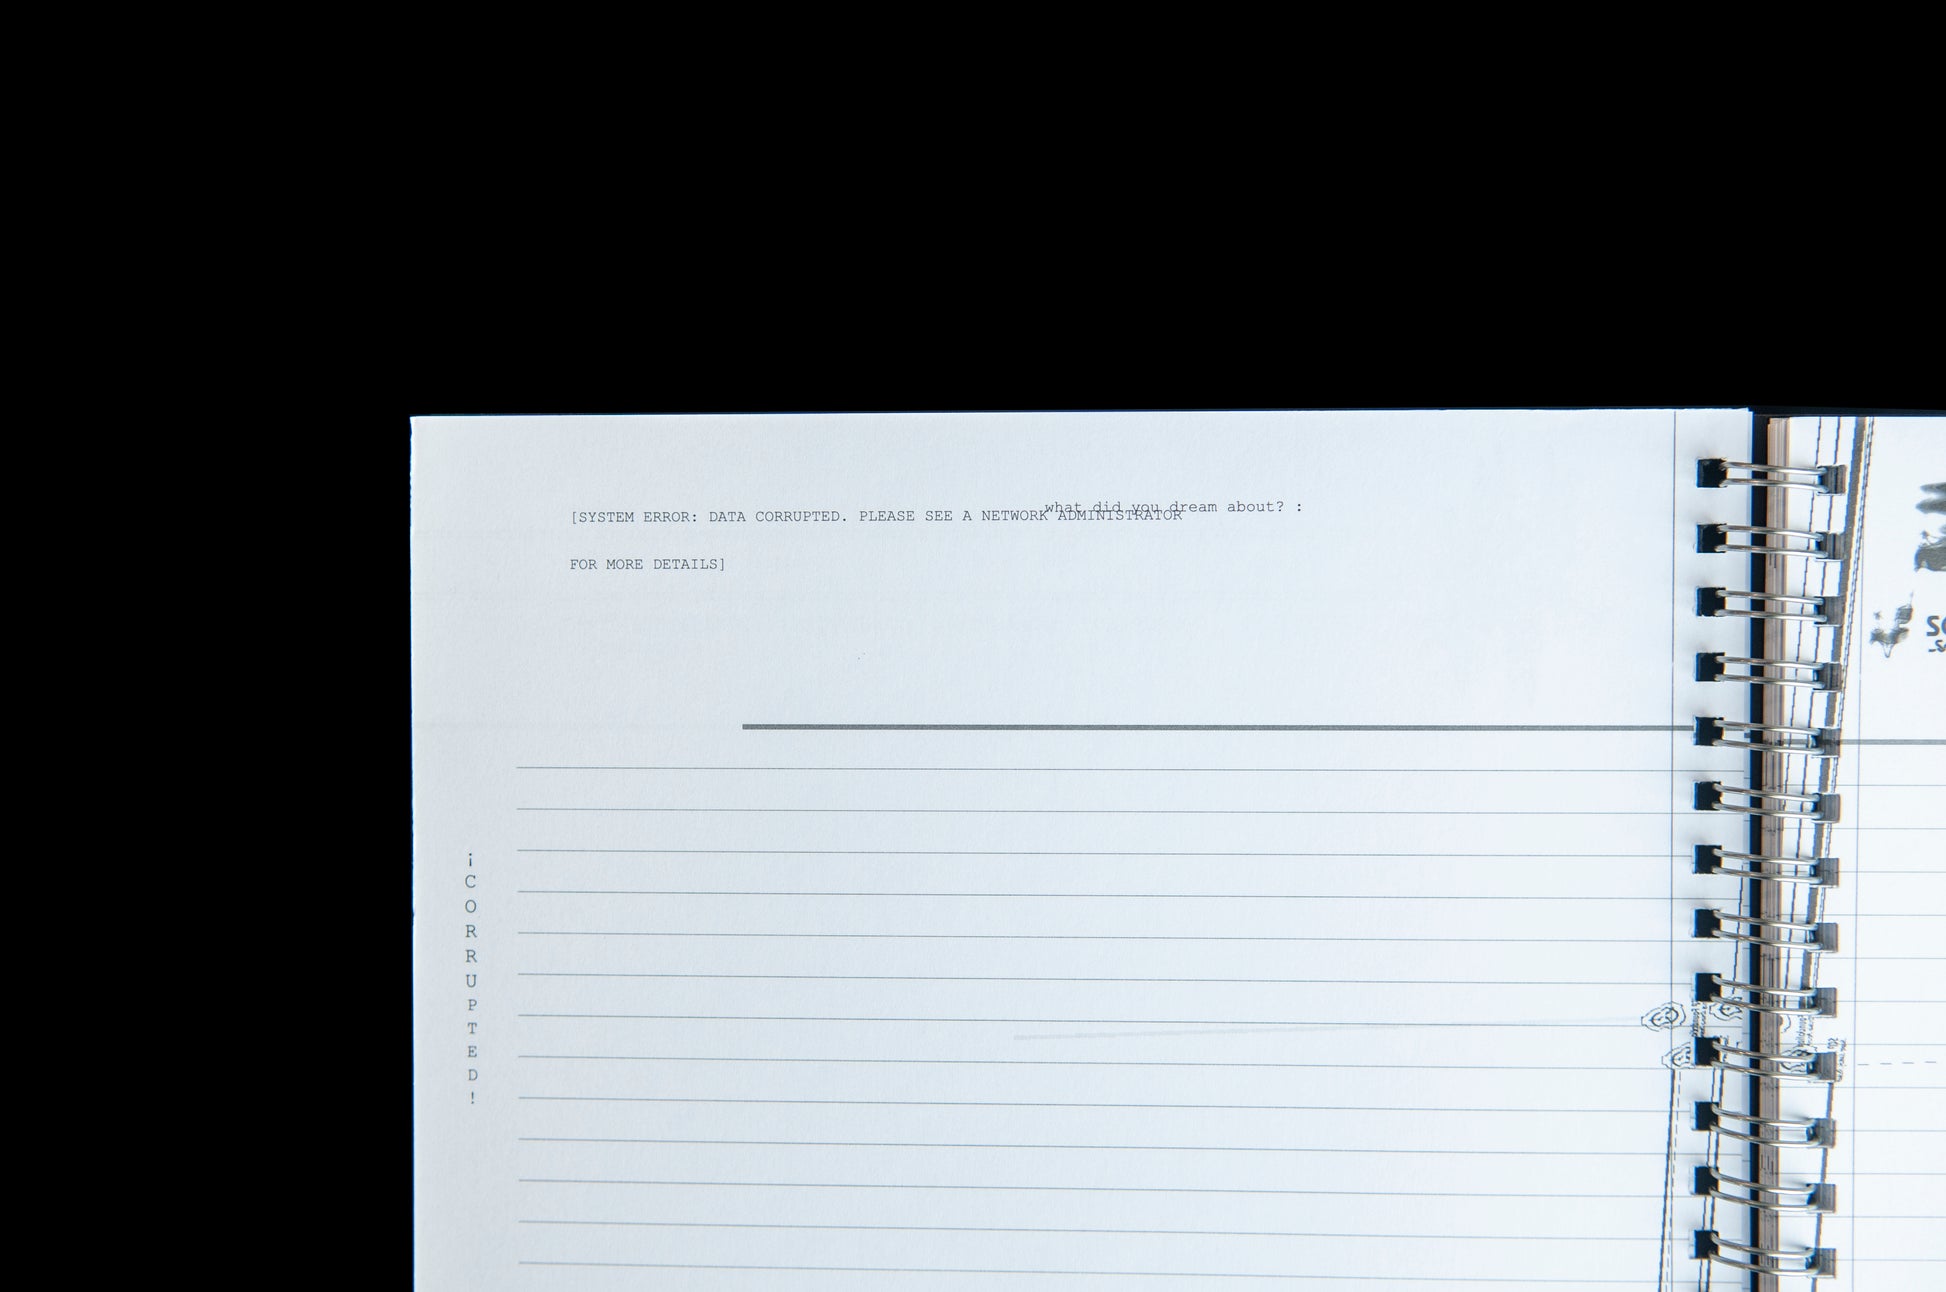 SCP Foundation Notebook Log / Journal by Opal Sky Studio